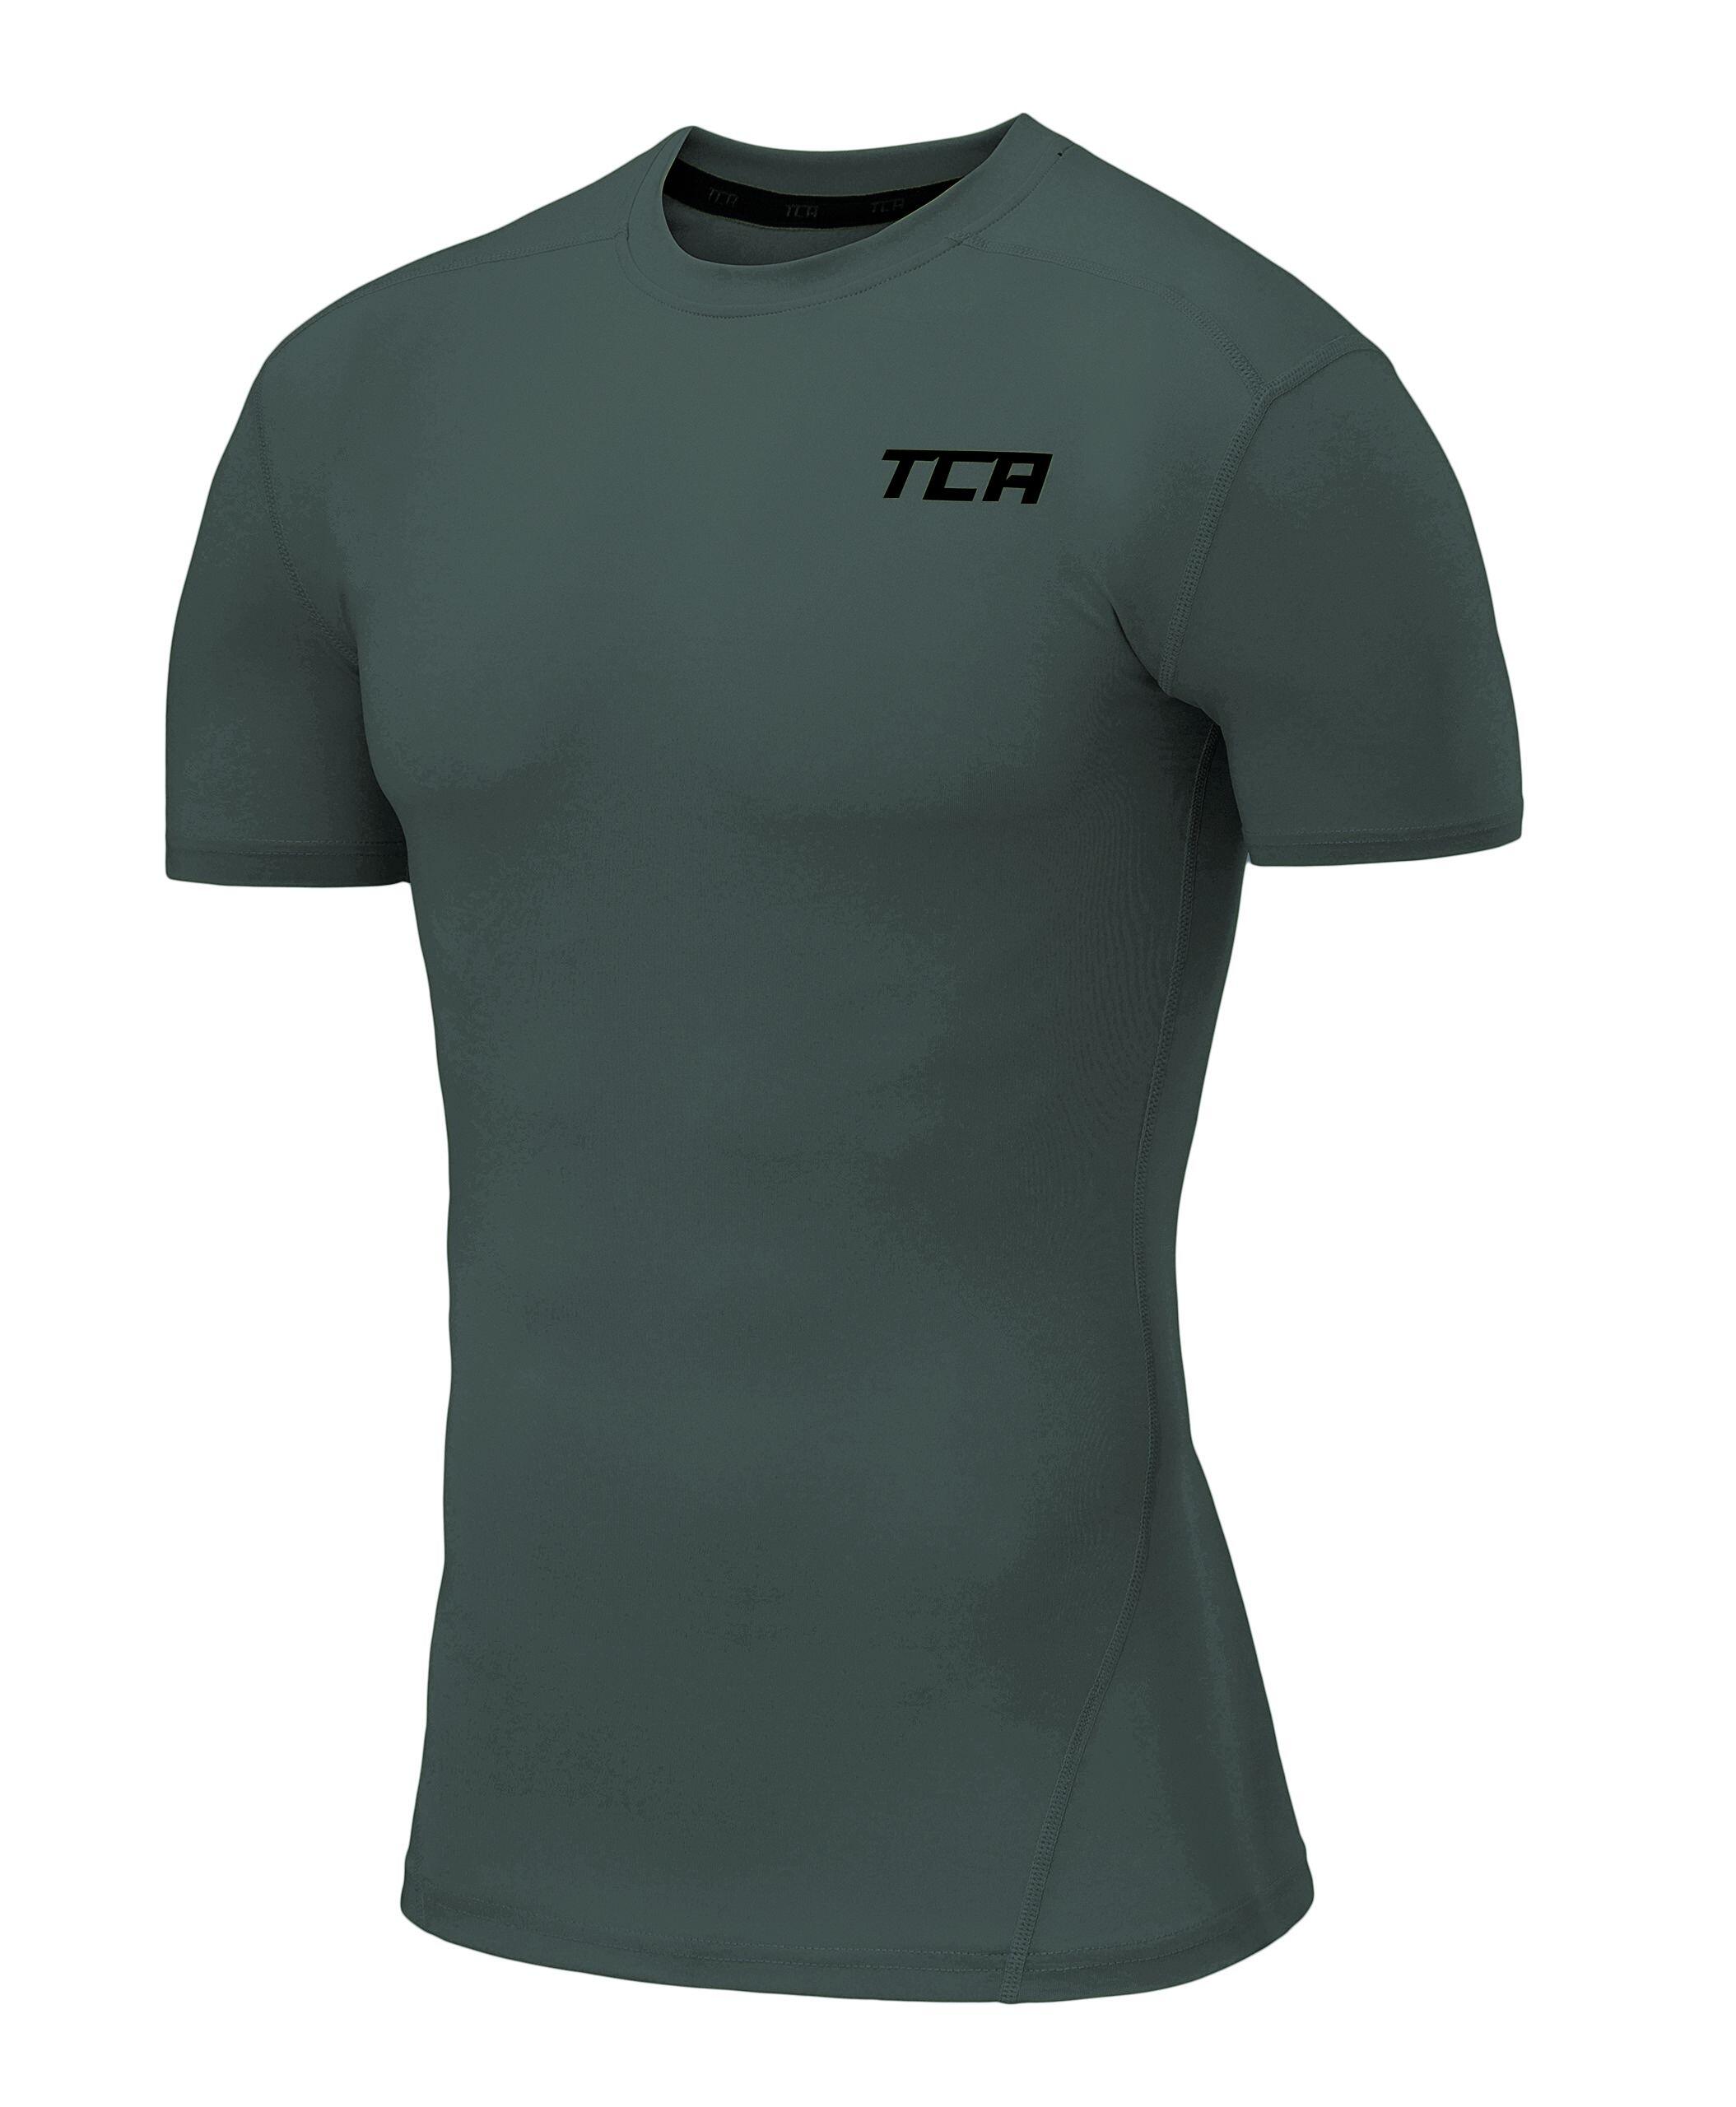 TCA Men's Performance Base Layer Compression T-shirt - Darkest Spruce